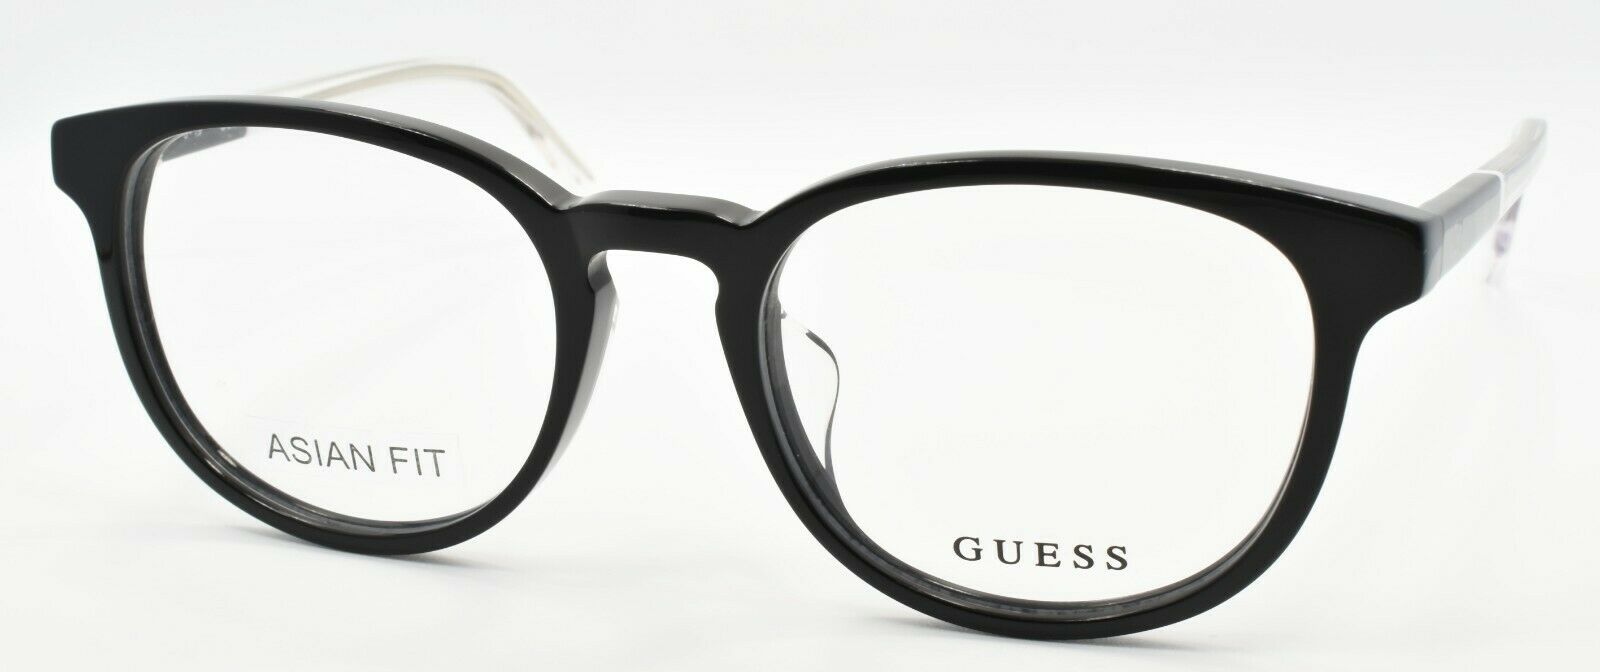 1-GUESS GU1973-F 001 Men's Eyeglasses Frames Asian Fit 51-19-145 Black / Clear-889214056368-IKSpecs